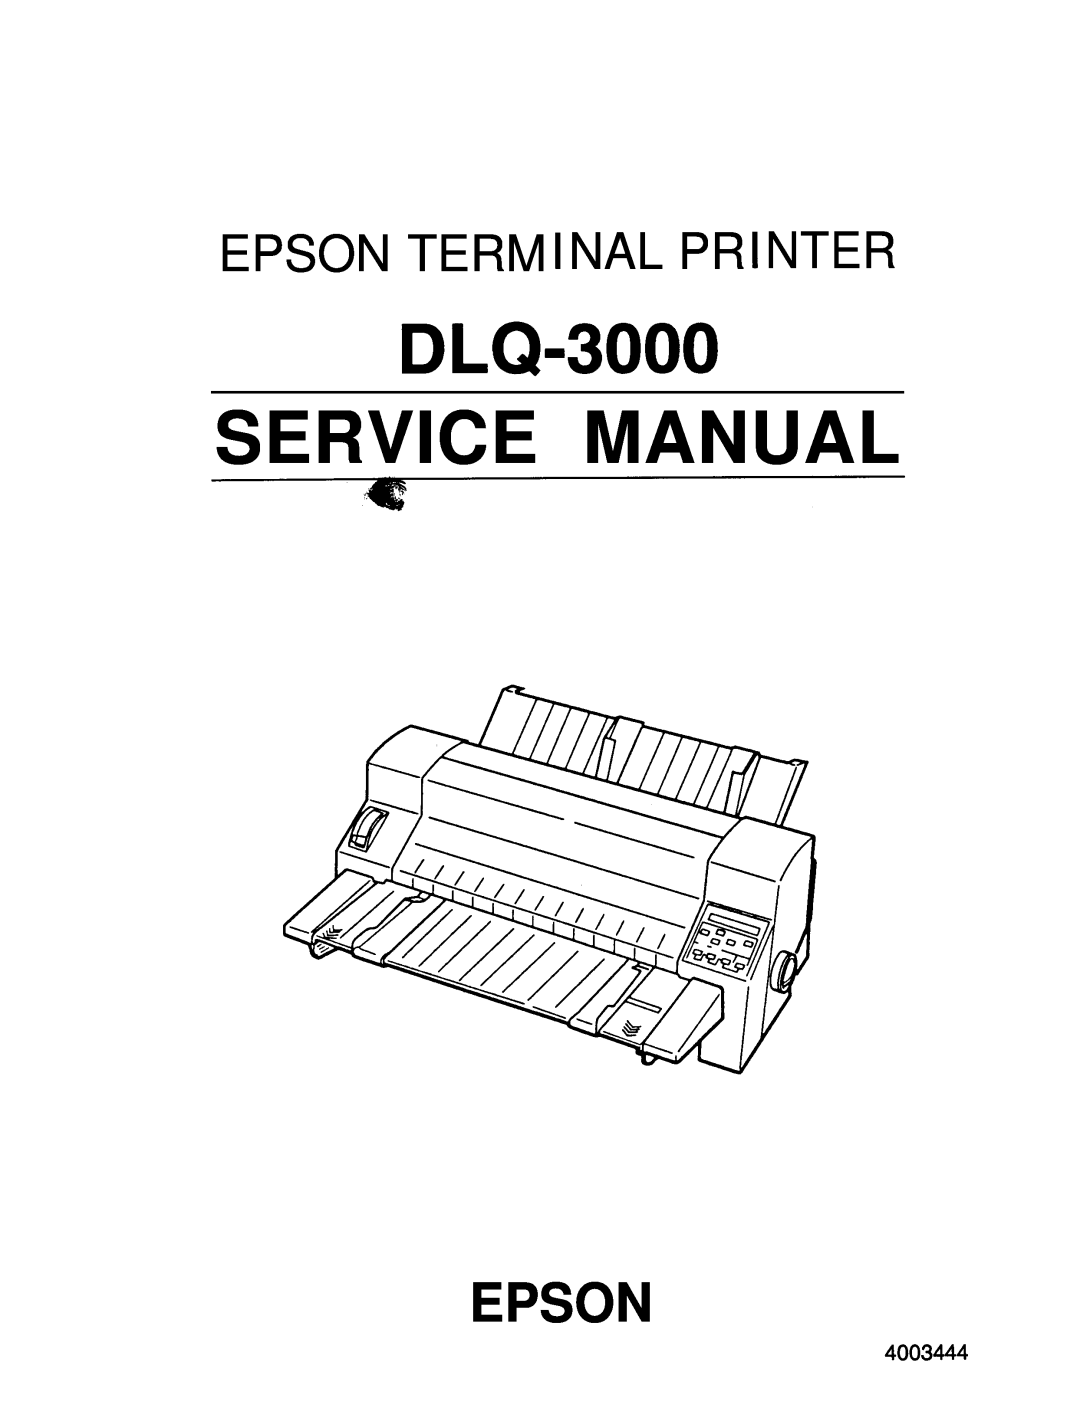 Epson DLQ-3000 service manual Service Manual, DLQ”3000, Epson Term Nal Pr Nter 